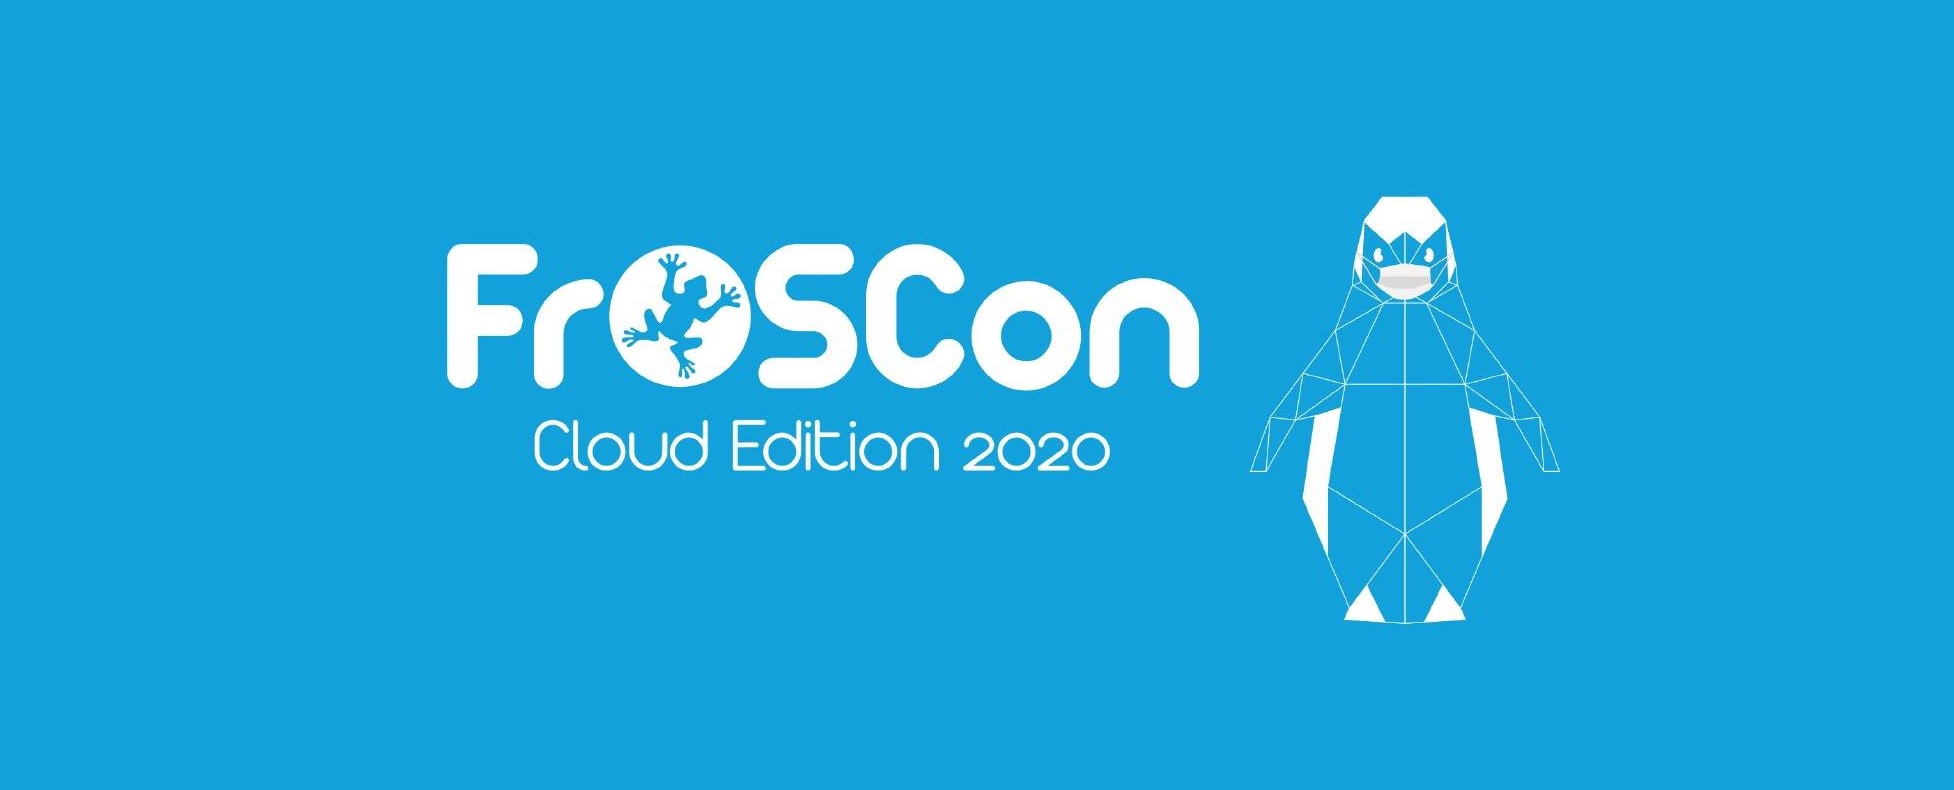 FrOSCon Cloud Edition 2020